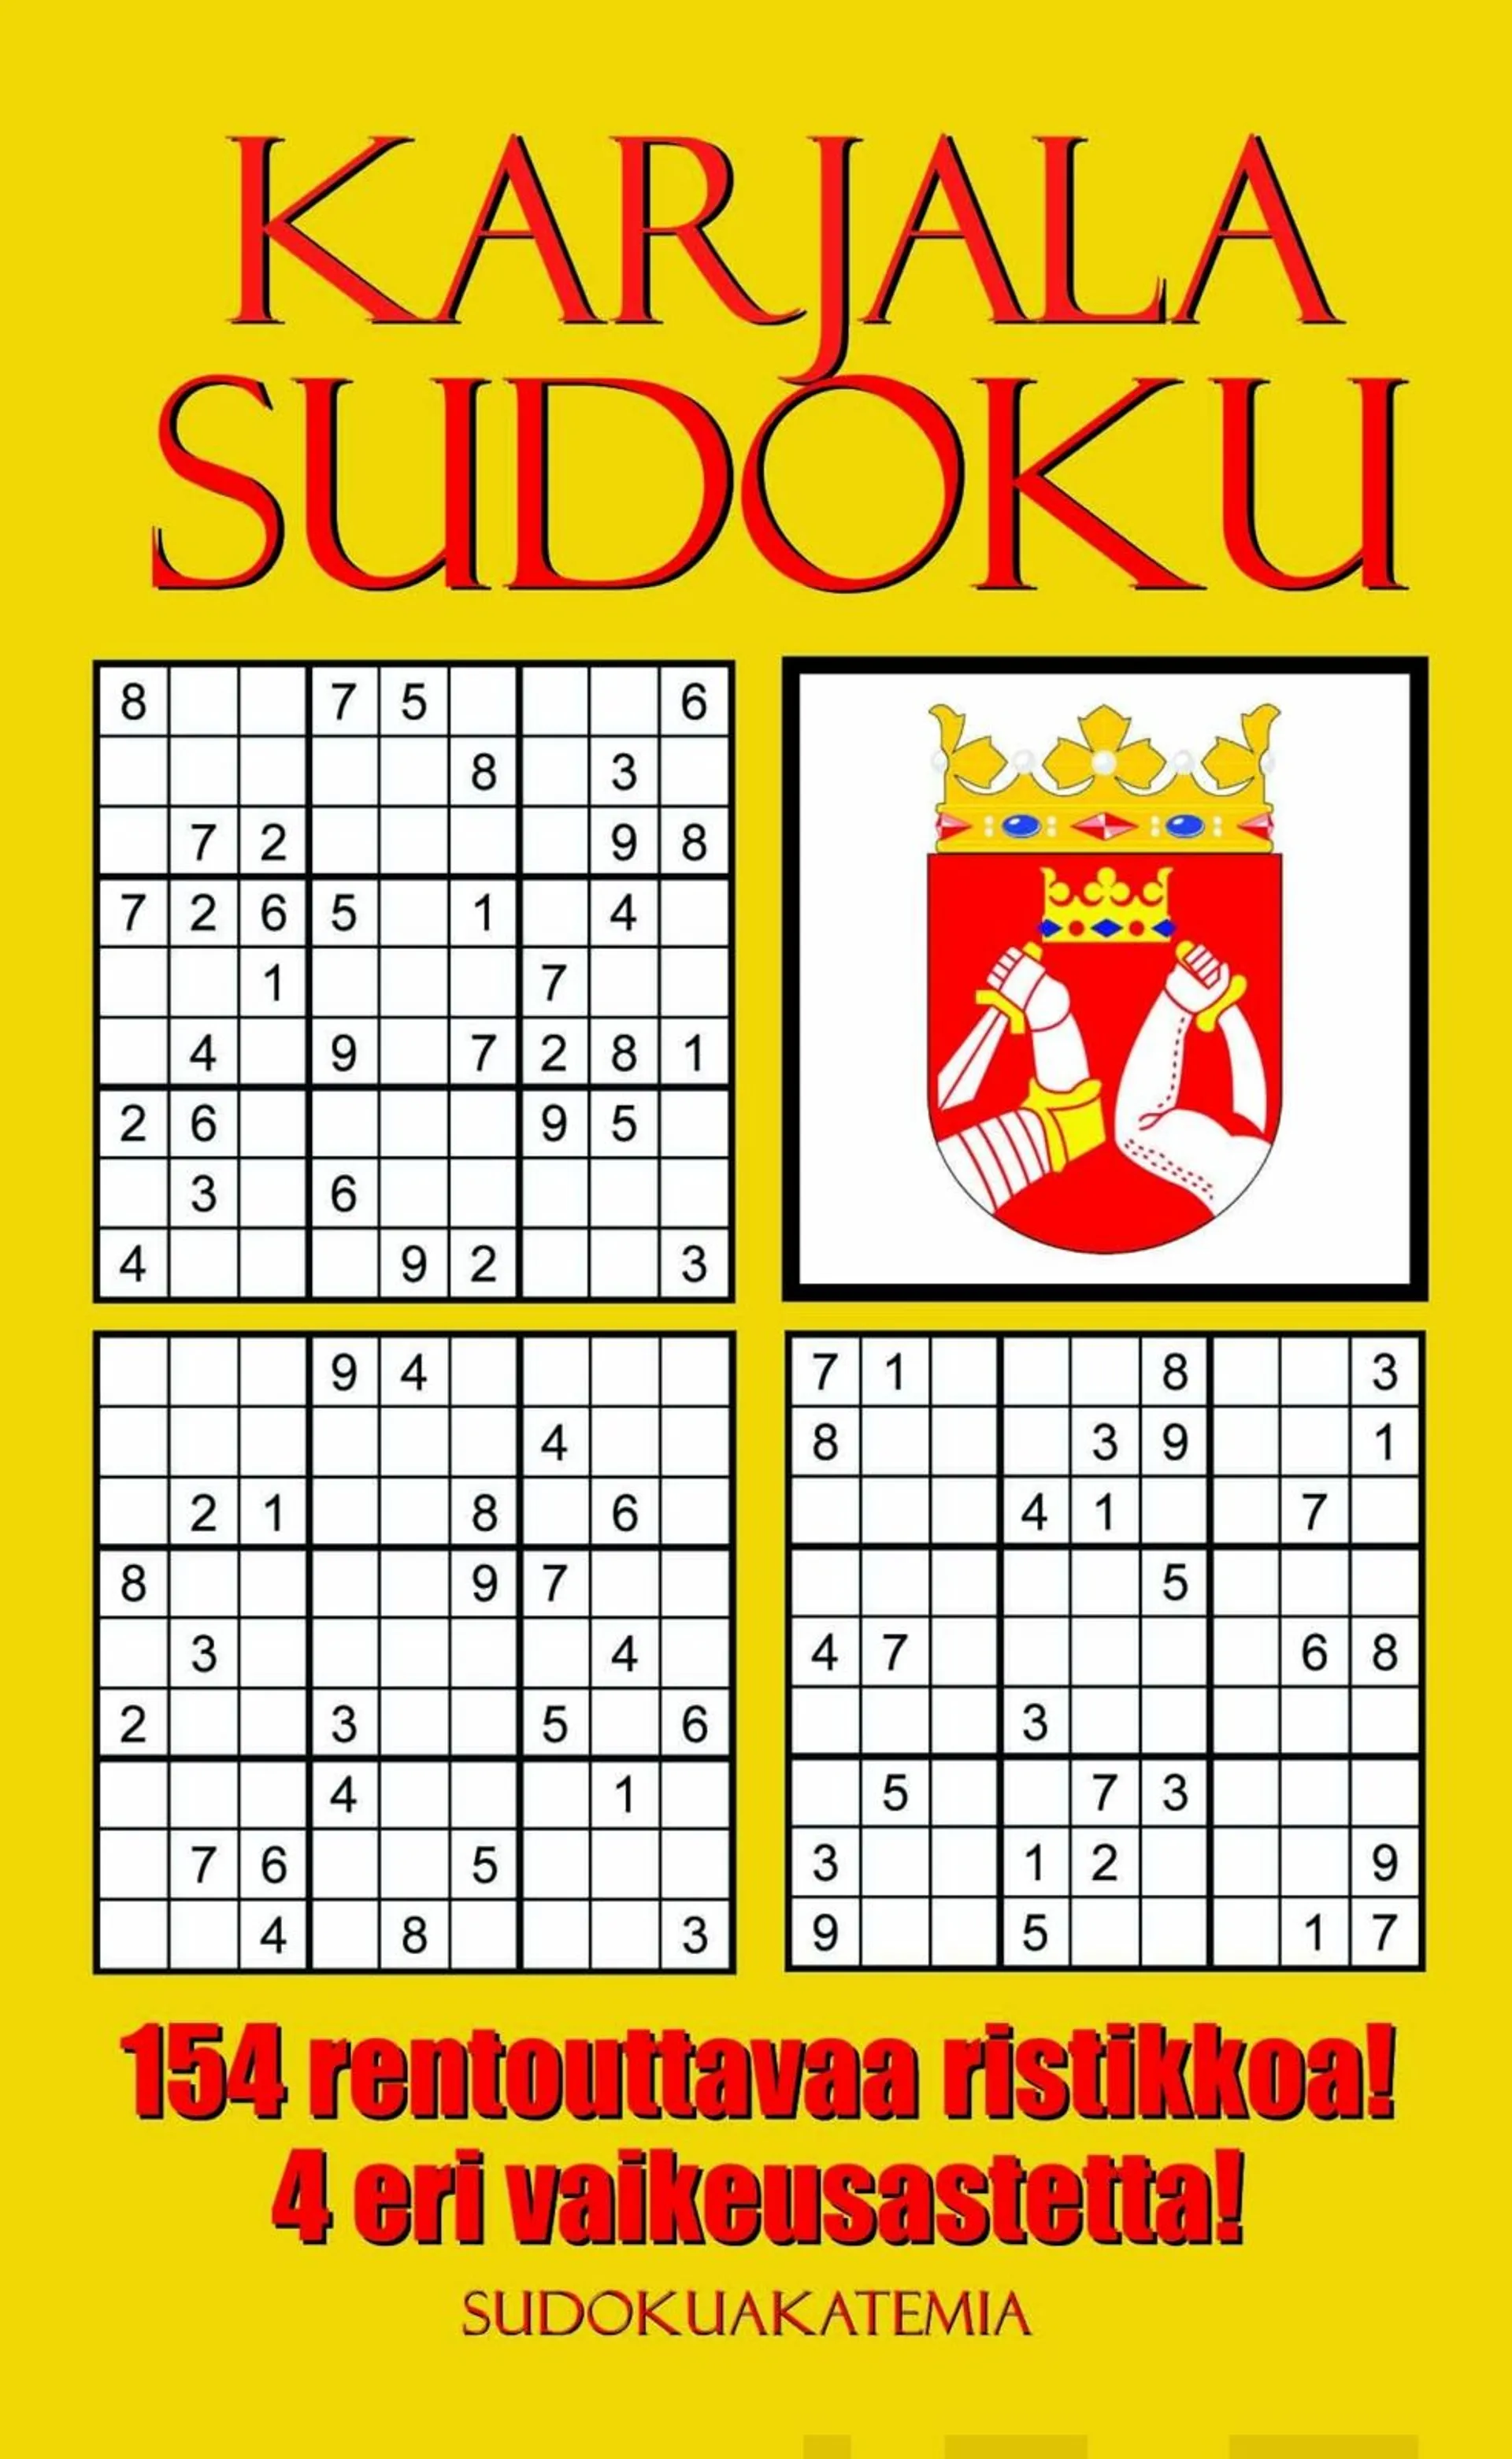 SudokuAkatemia, KarjalaSudoku